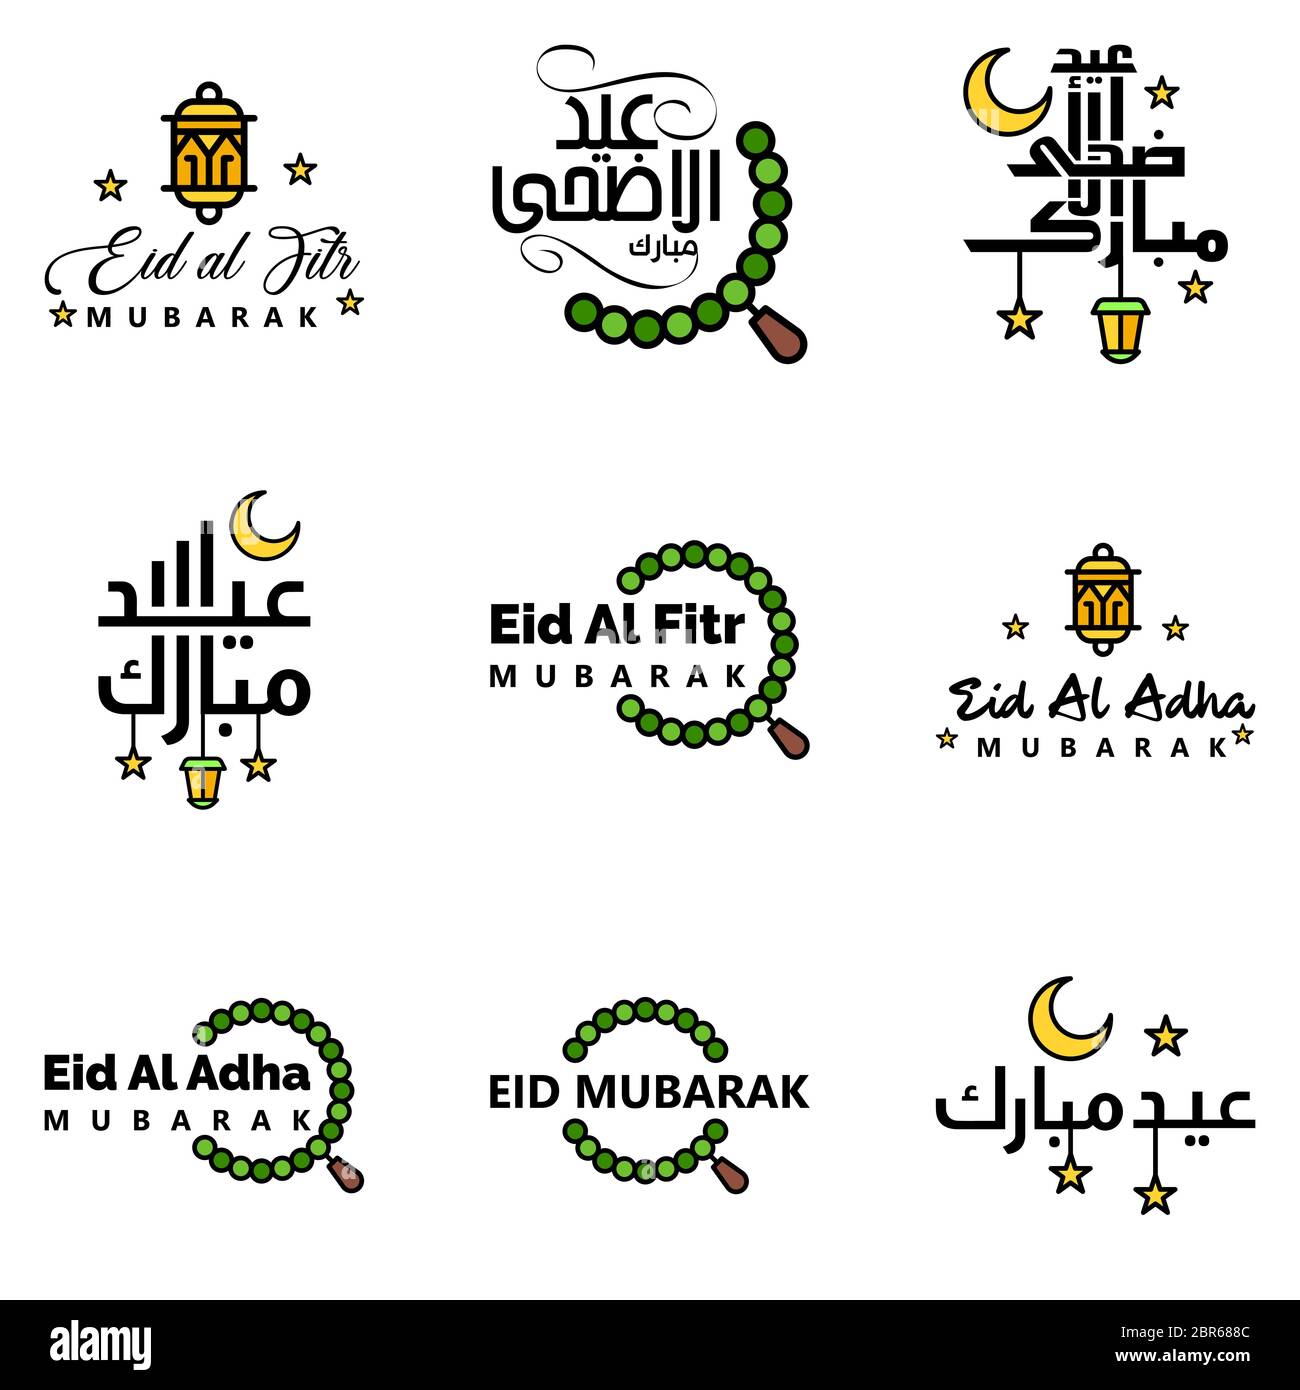 Happy Eid Mubarak. Selamat Hari Raya Idul Fitri. Eid Al-fitr Vector Pack of 9 Illustration. Best for Greeting Cards Poster and Banners. Stock Vector